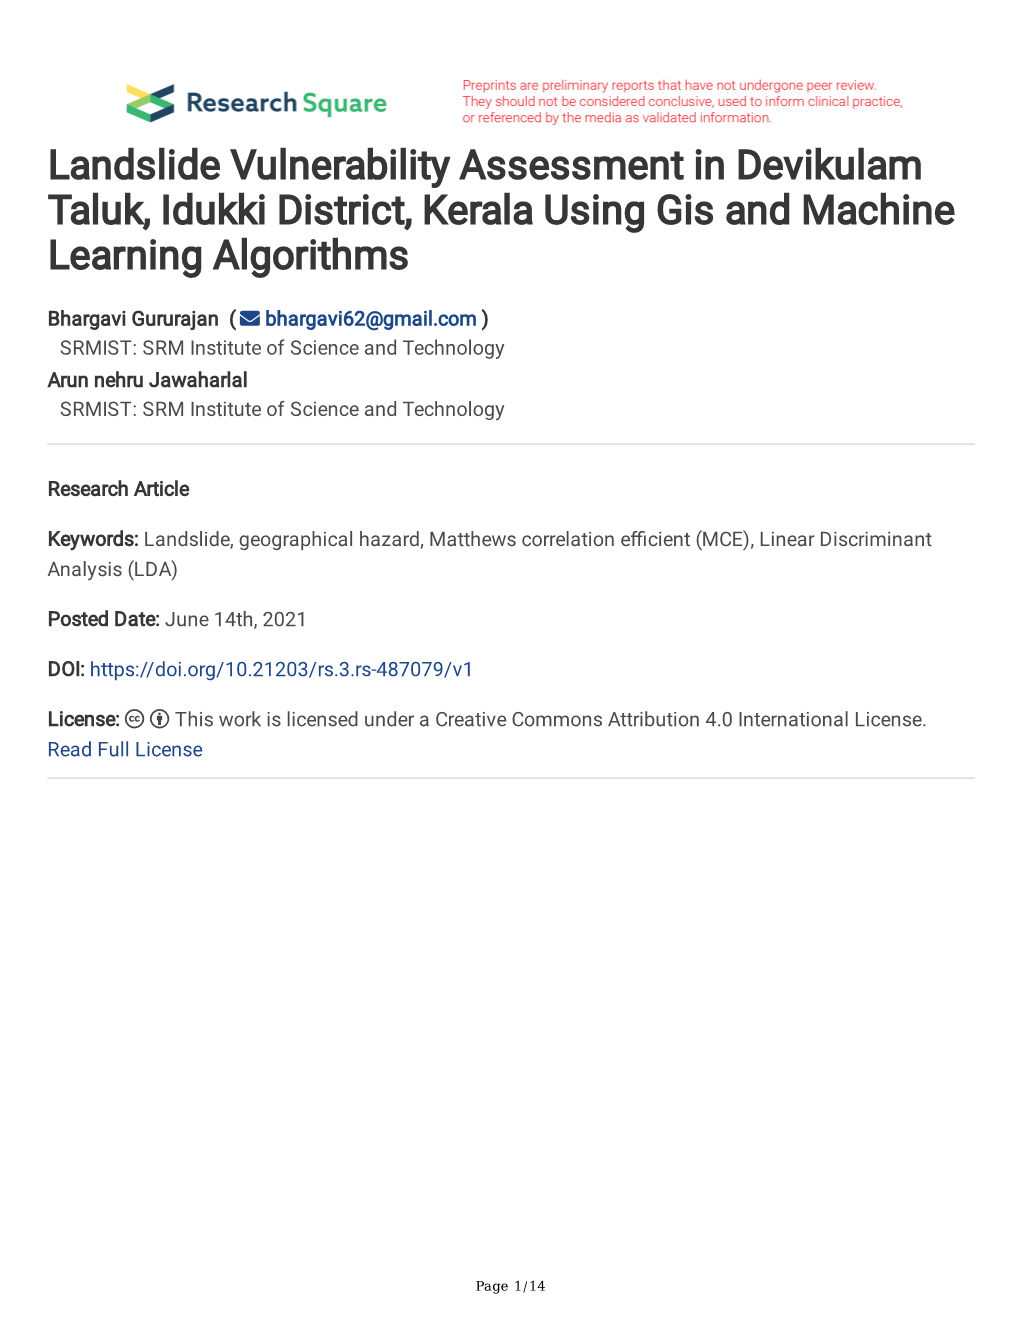 Landslide Vulnerability Assessment in Devikulam Taluk, Idukki District, Kerala Using Gis and Machine Learning Algorithms